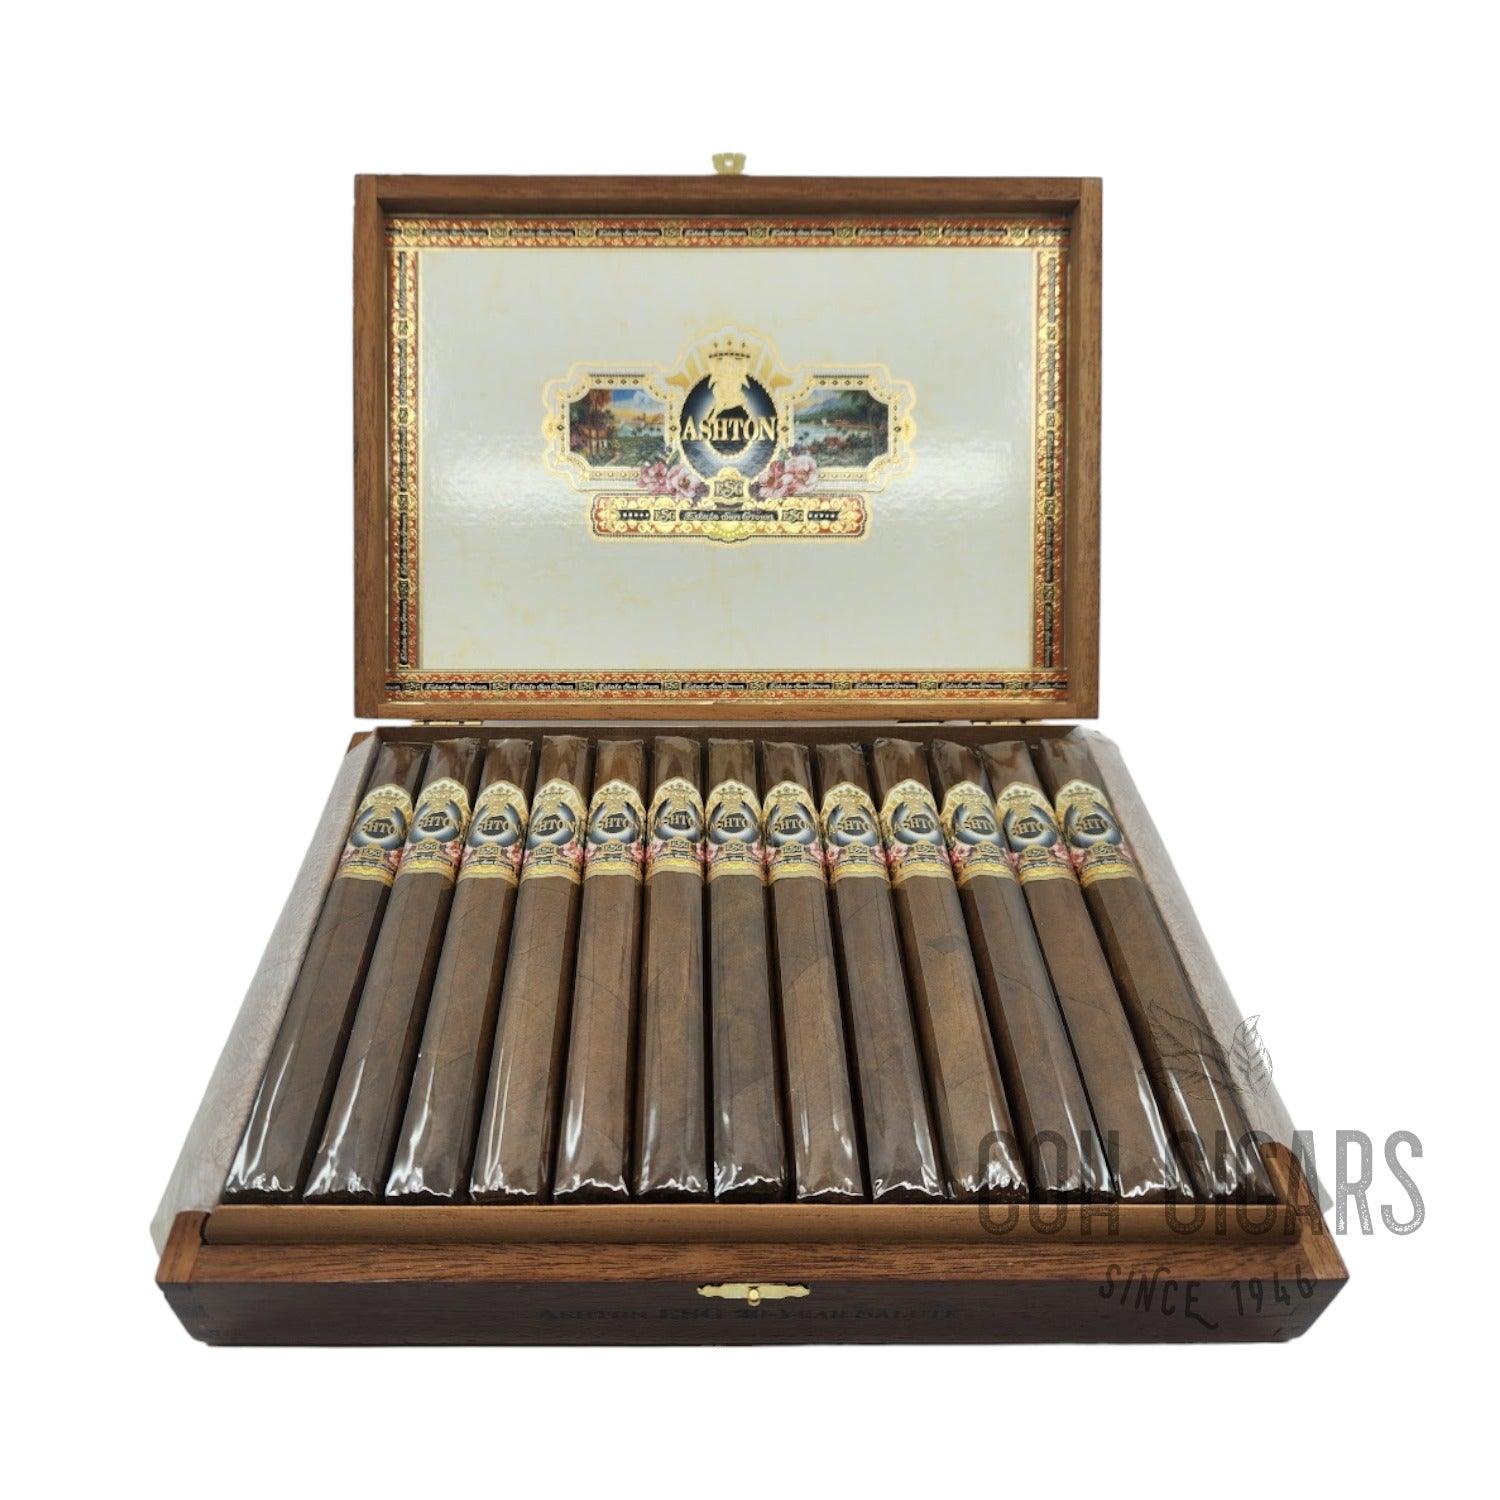 Ashton Cigar | ESG 20 Year Salute | Box 25 - hk.cohcigars